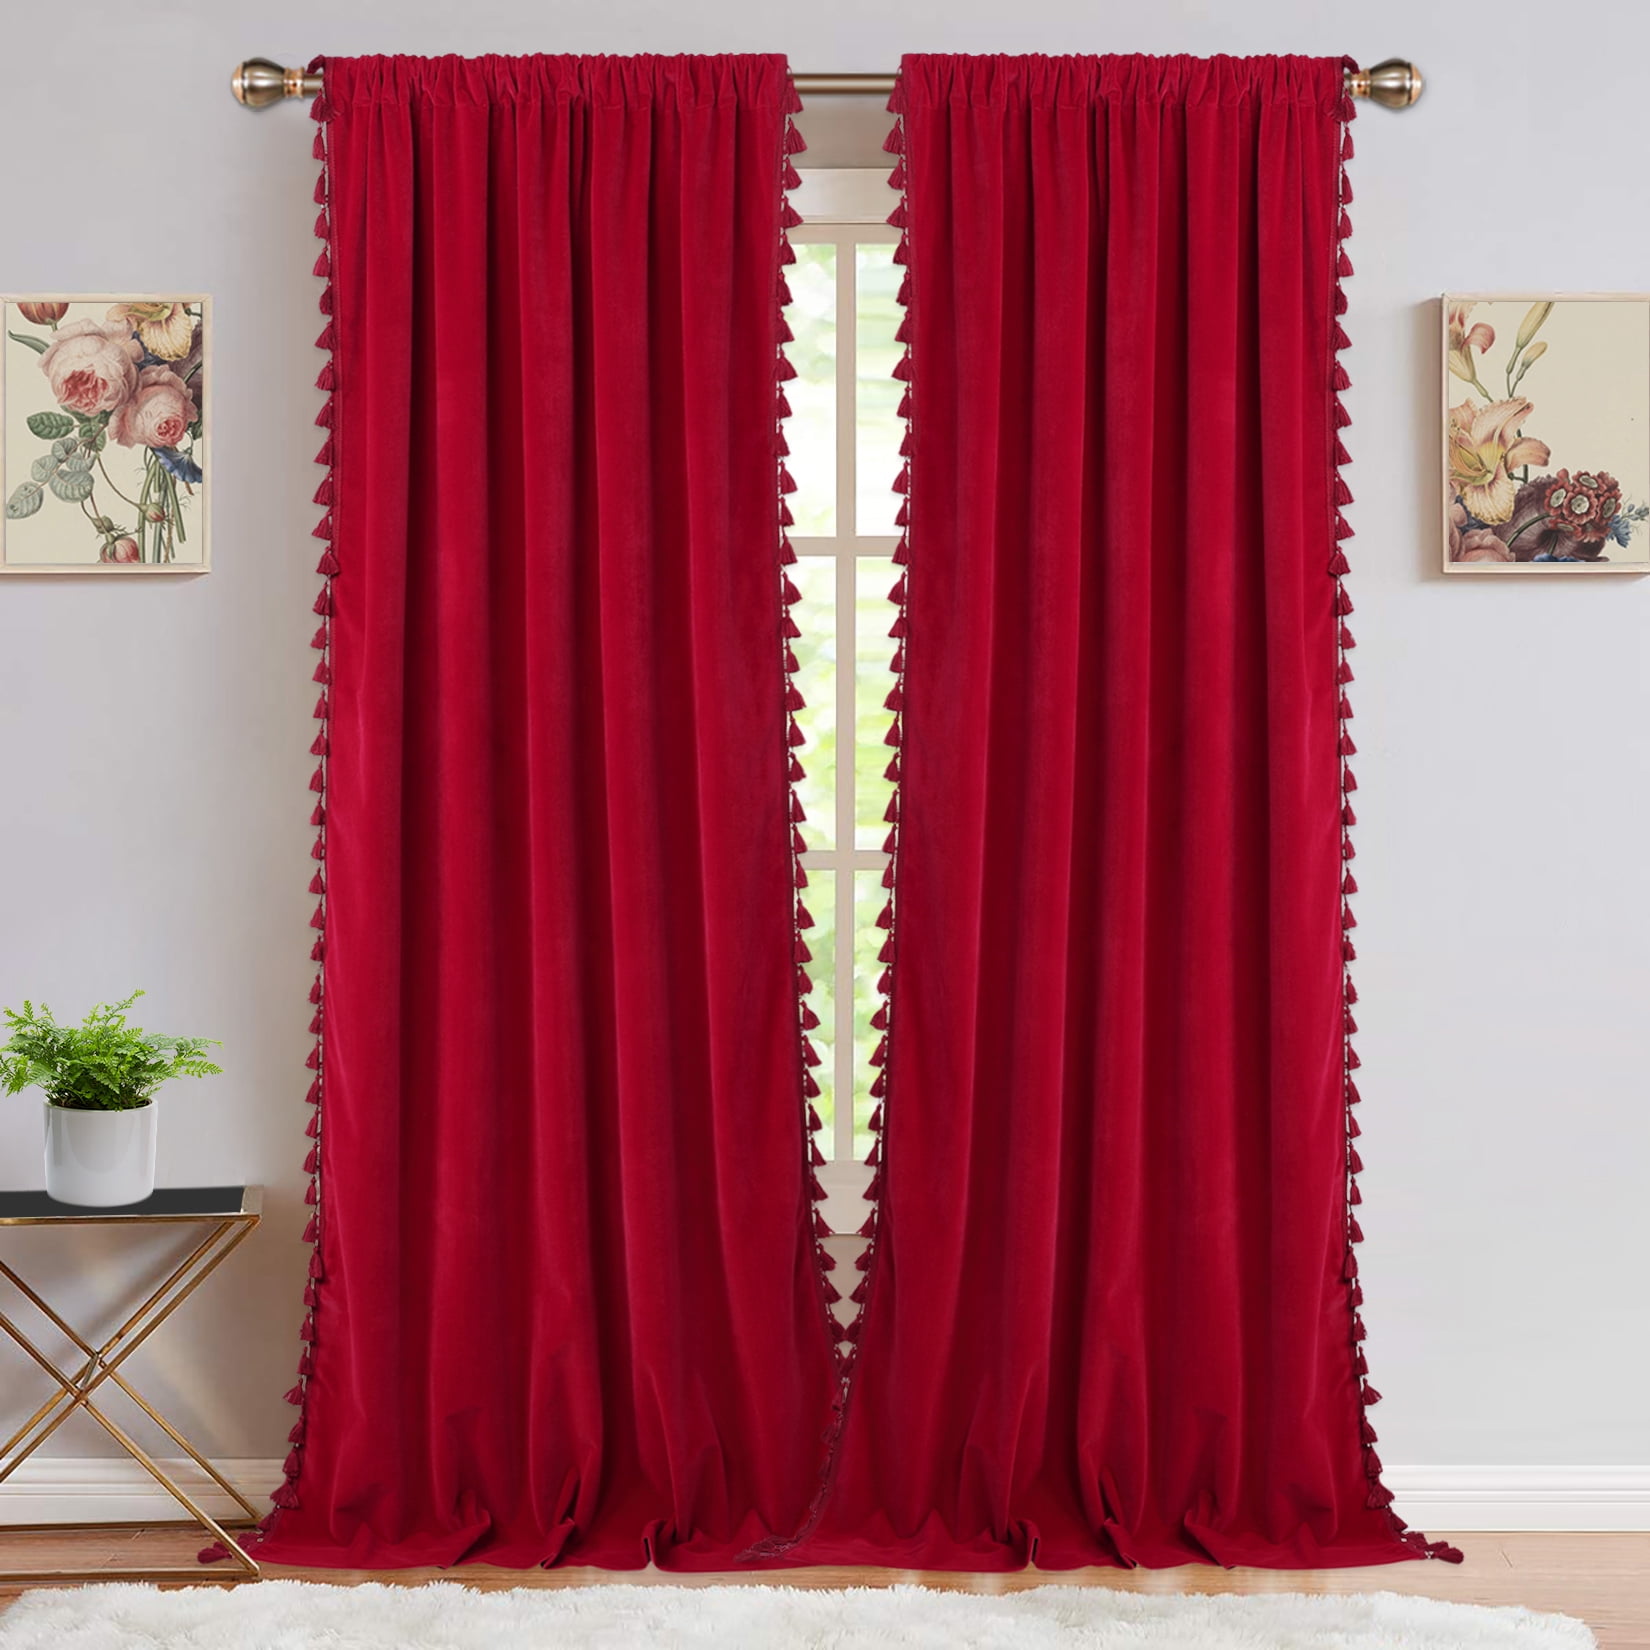 Glowsol 42 W X 96 L Red Velvet Curtains For Bedroom Boho Tassels Light Reducing Rod Pocket Window Treatment Sets 2 Panels Com